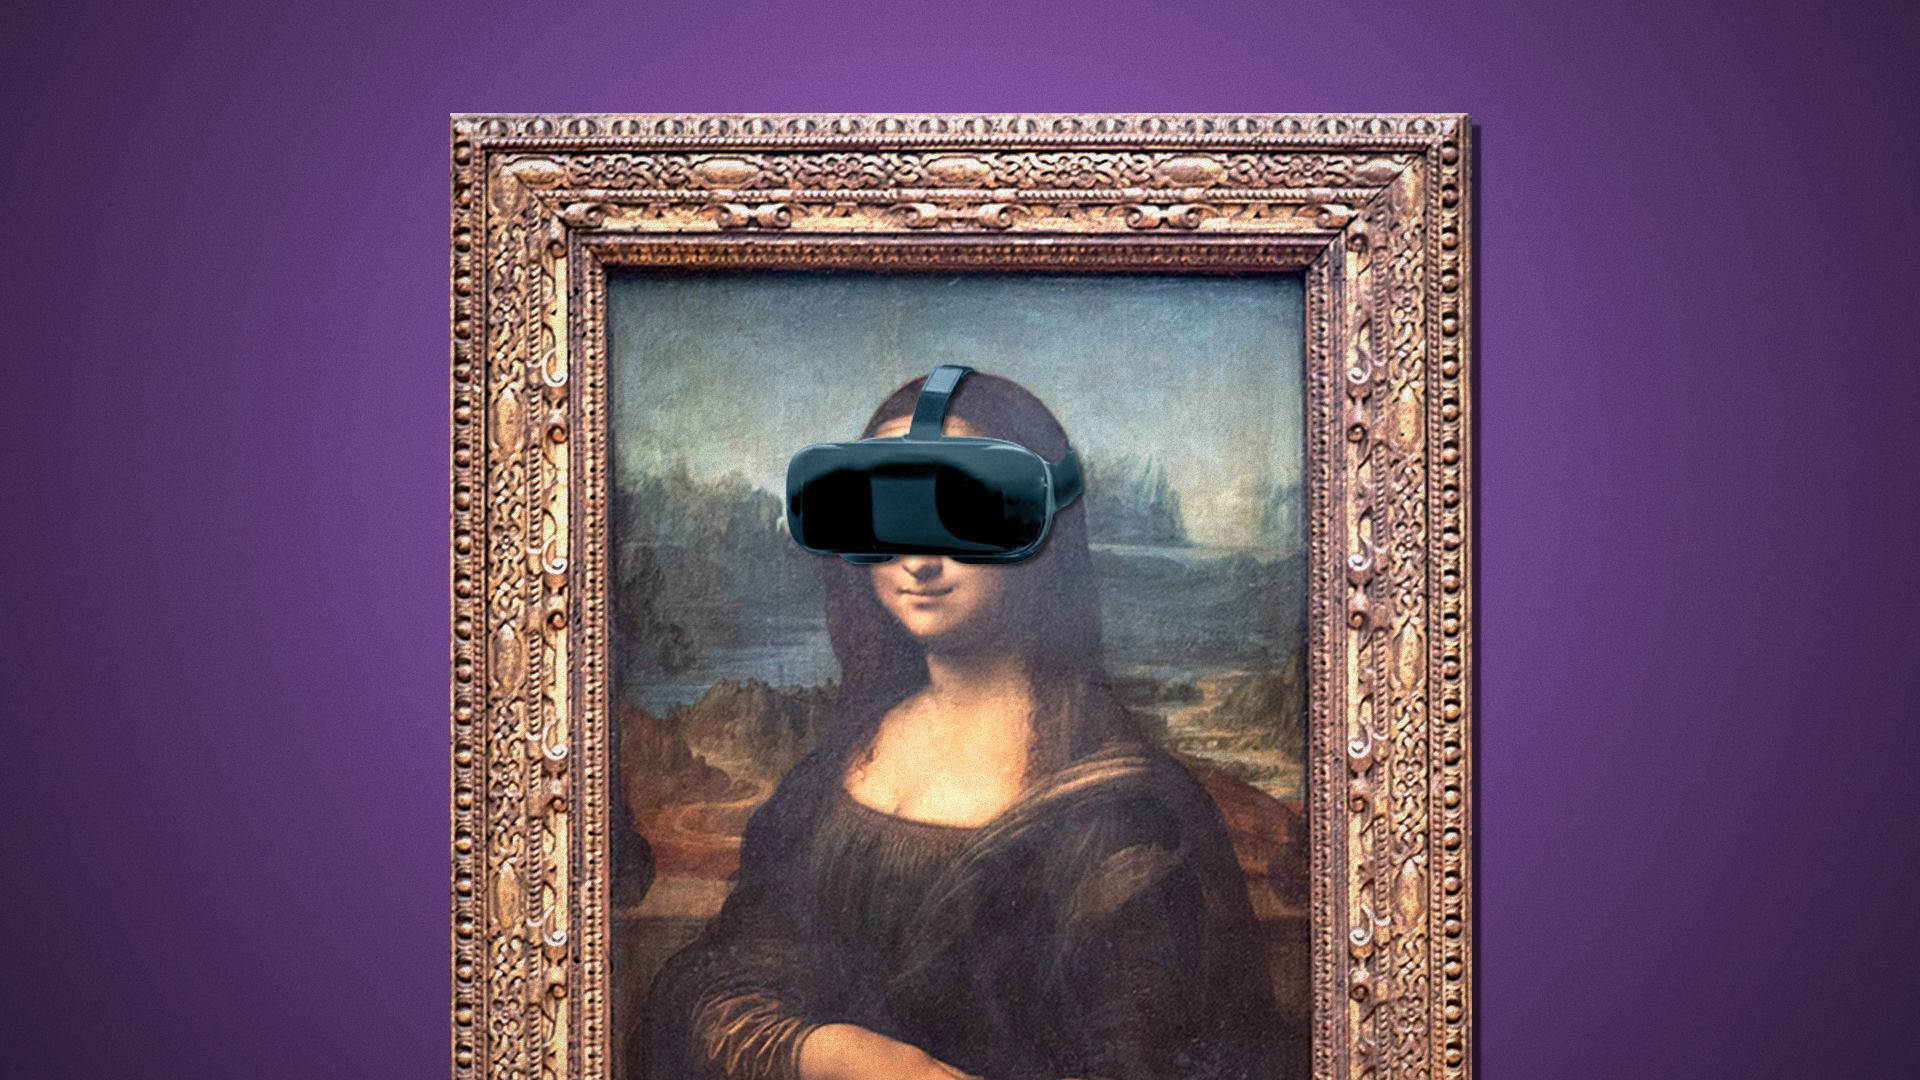 Mona Lisa with Vr headset